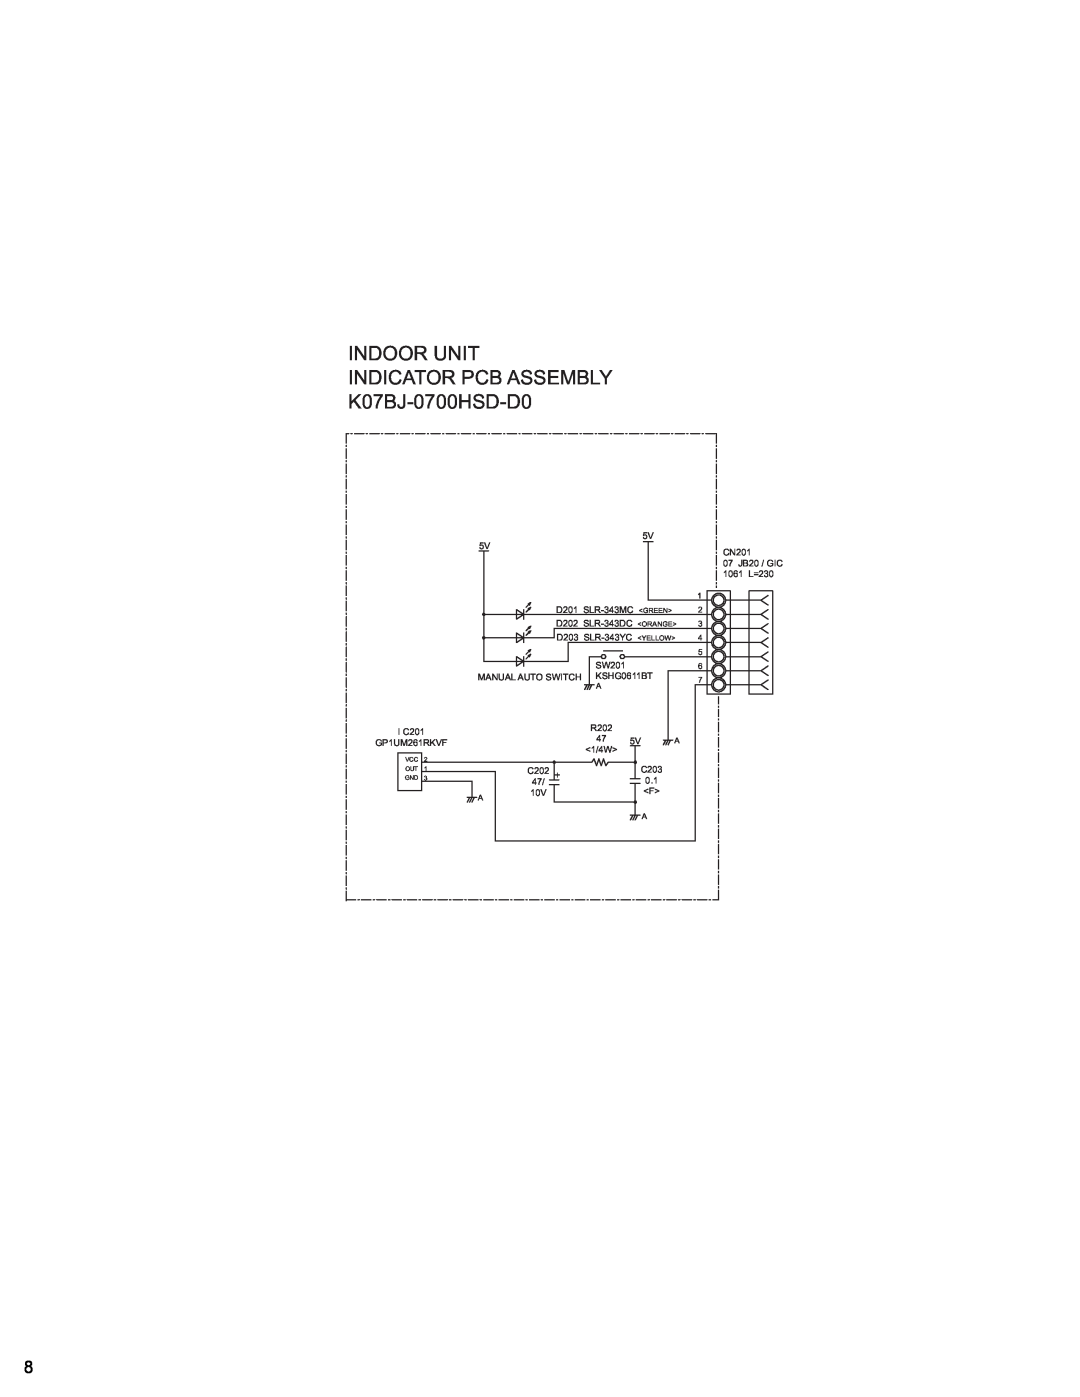 Friedrich MR12Y3H, MR09Y3H manual Indoor Unit Indicator Pcb Assembly, K07BJ-0700HSD-D0 